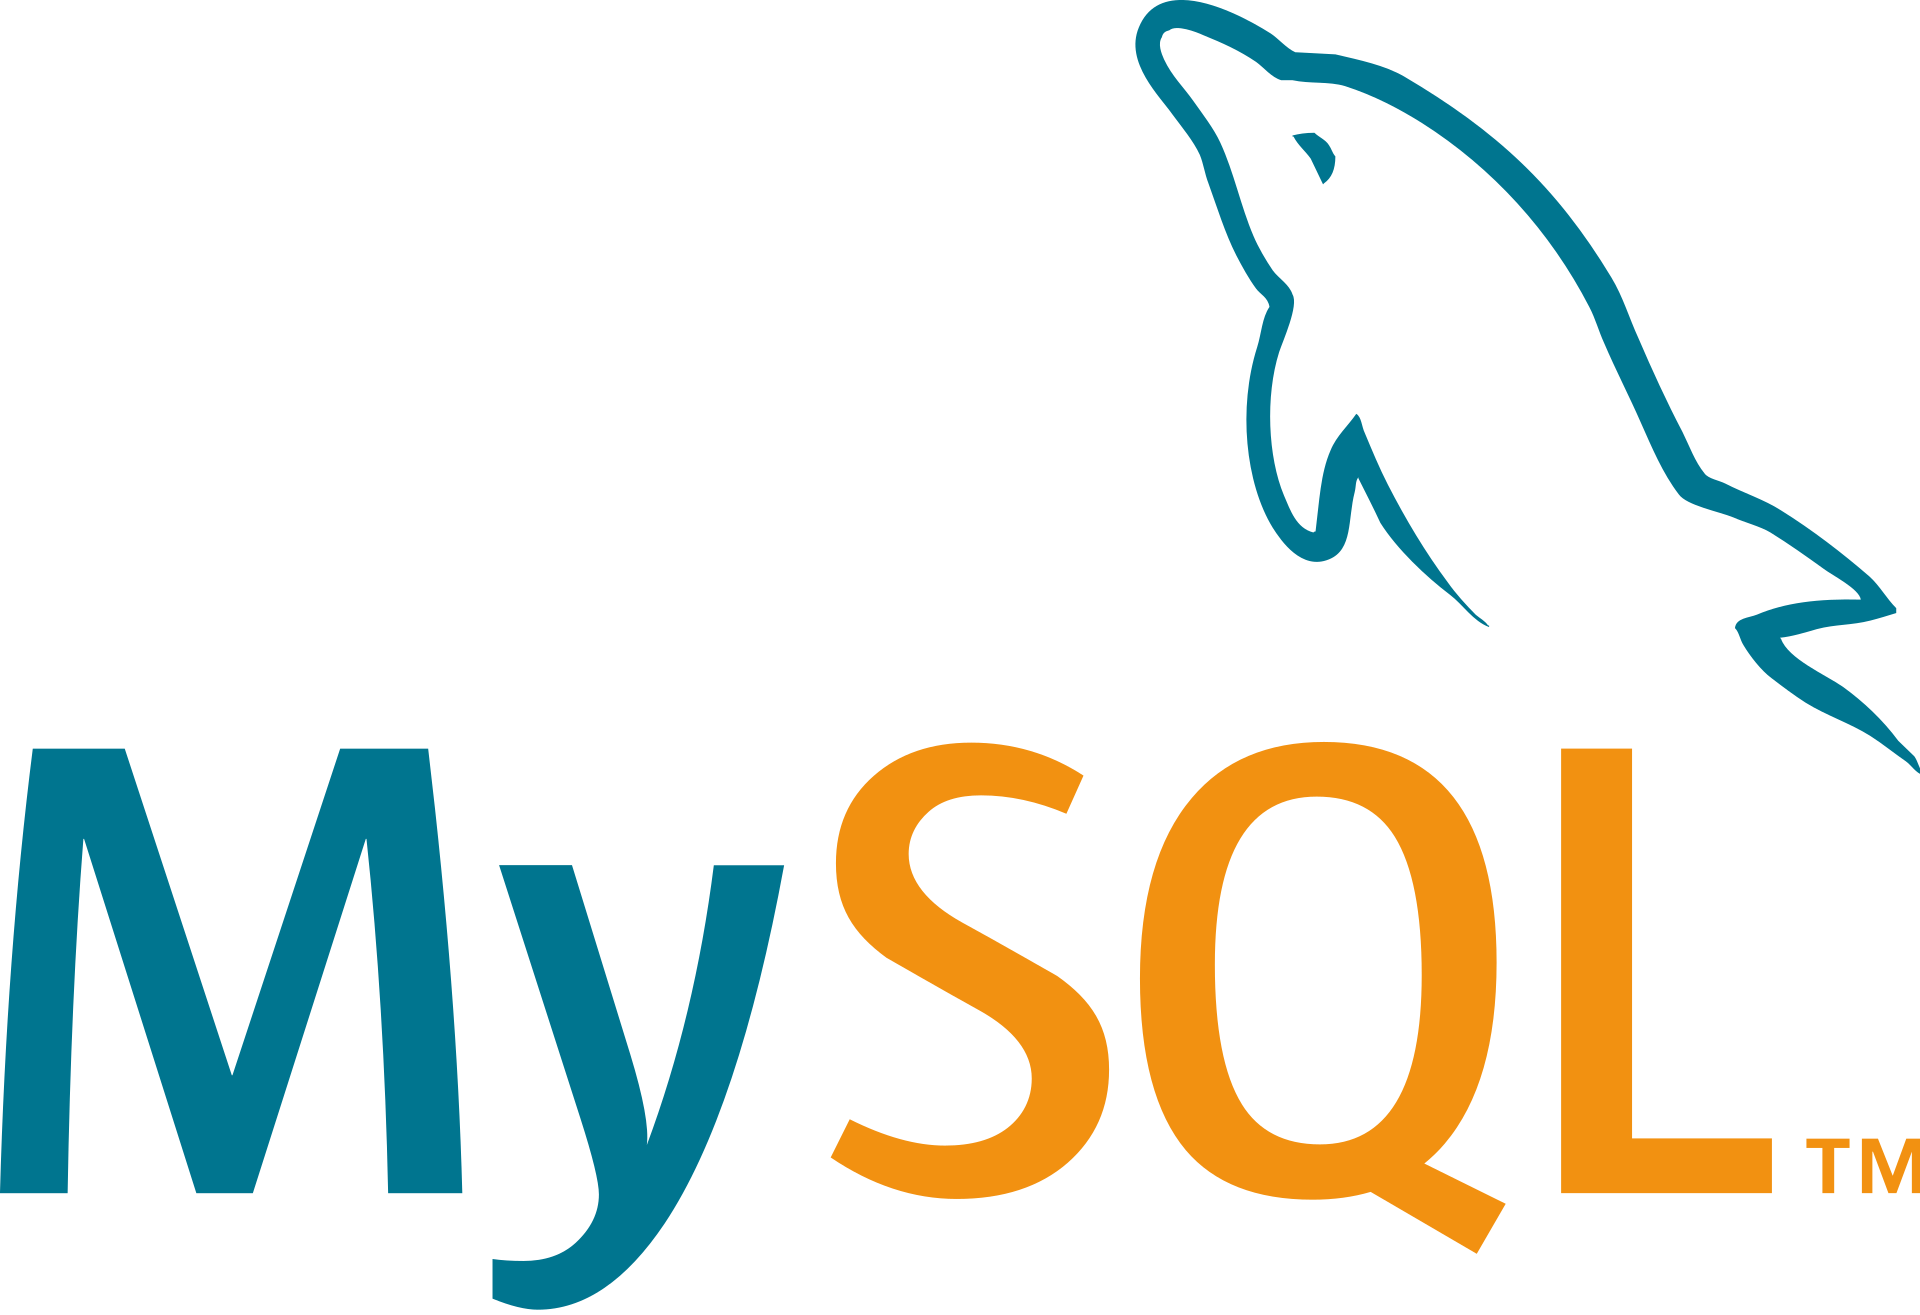 MySQL dbms logo